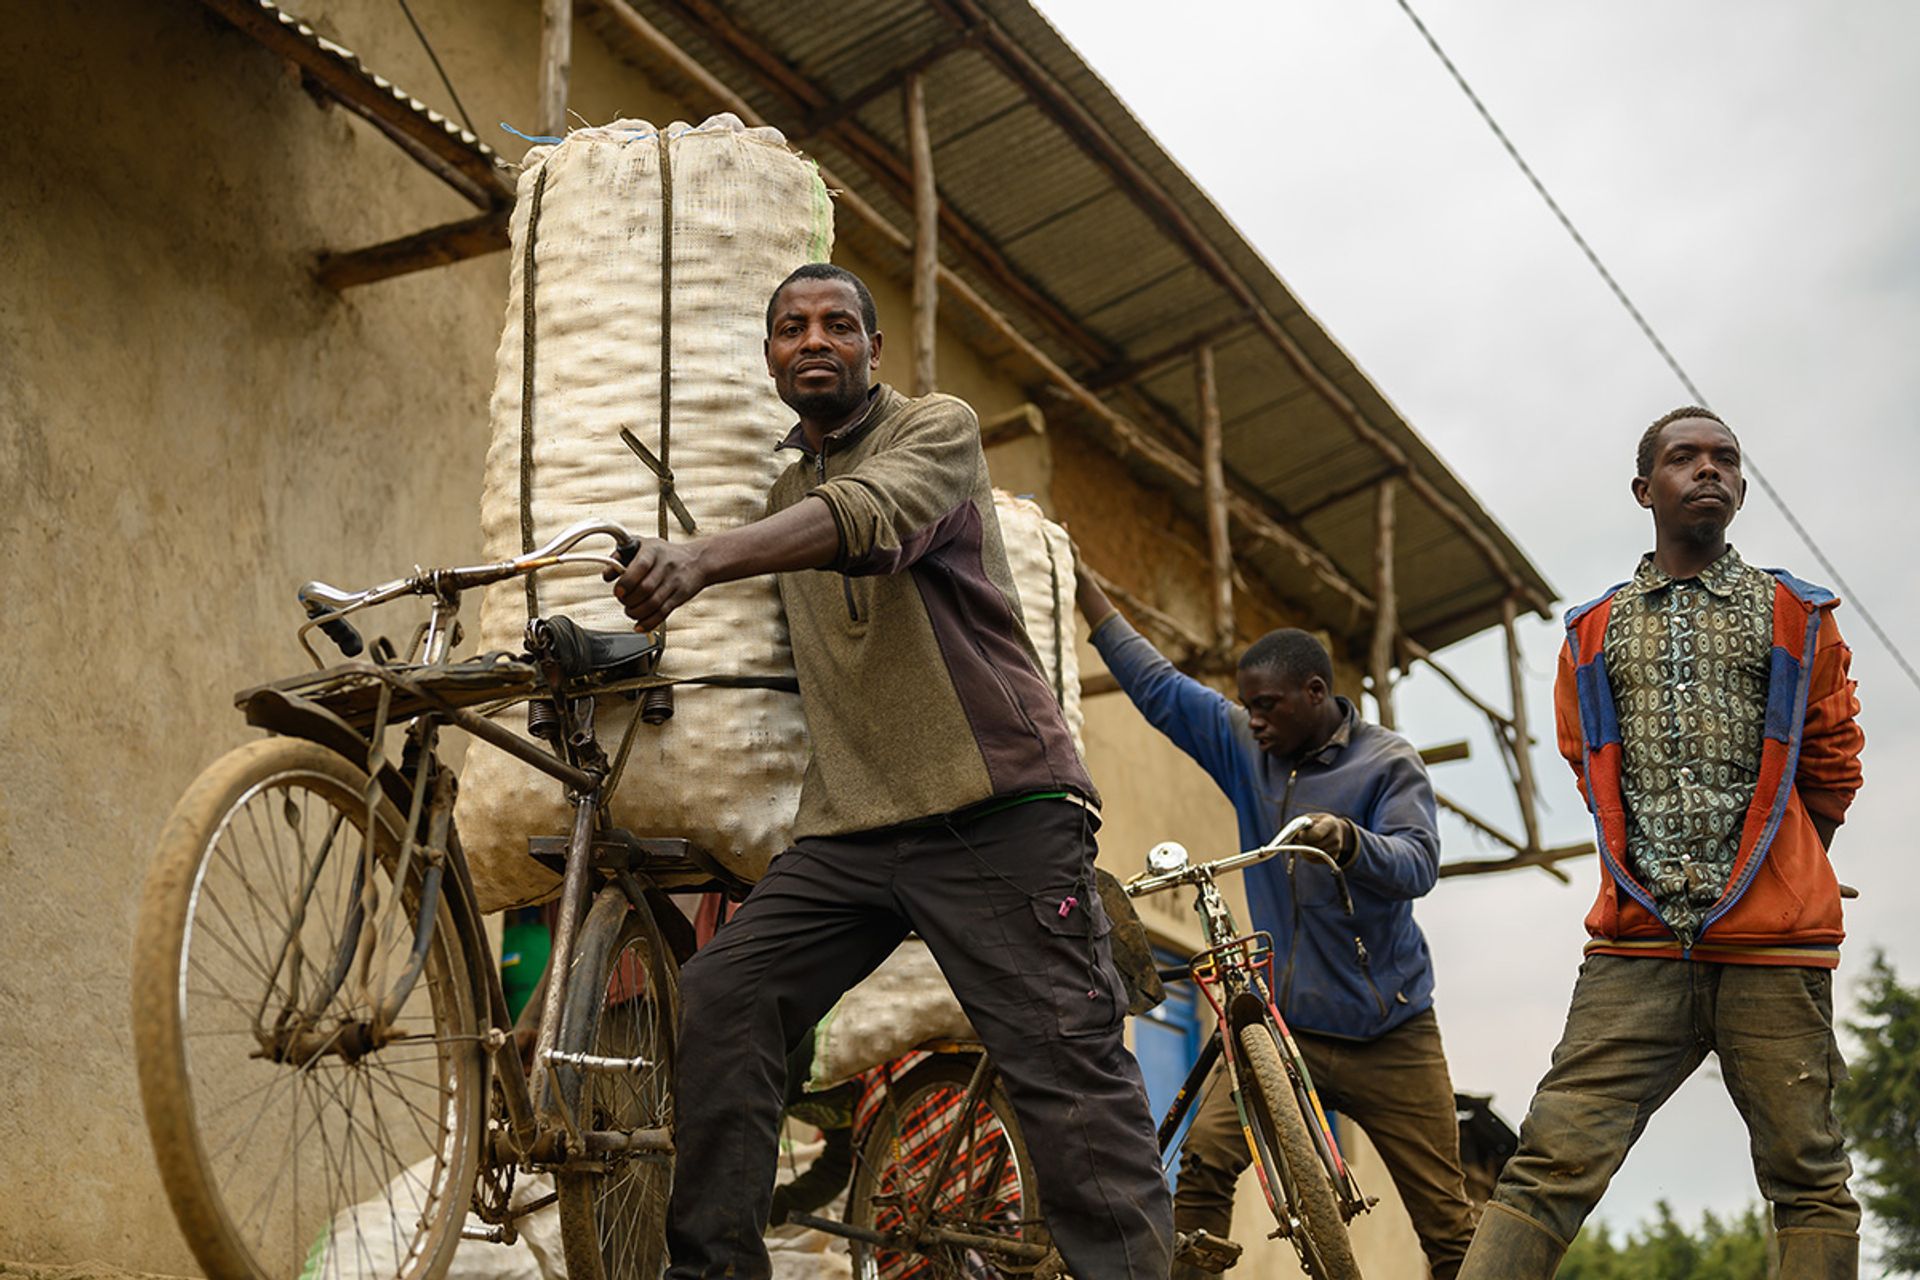 Potato farmer Innocent Munyawera, 38, pushing a bike laden with potatoes weighing up to 200kg.